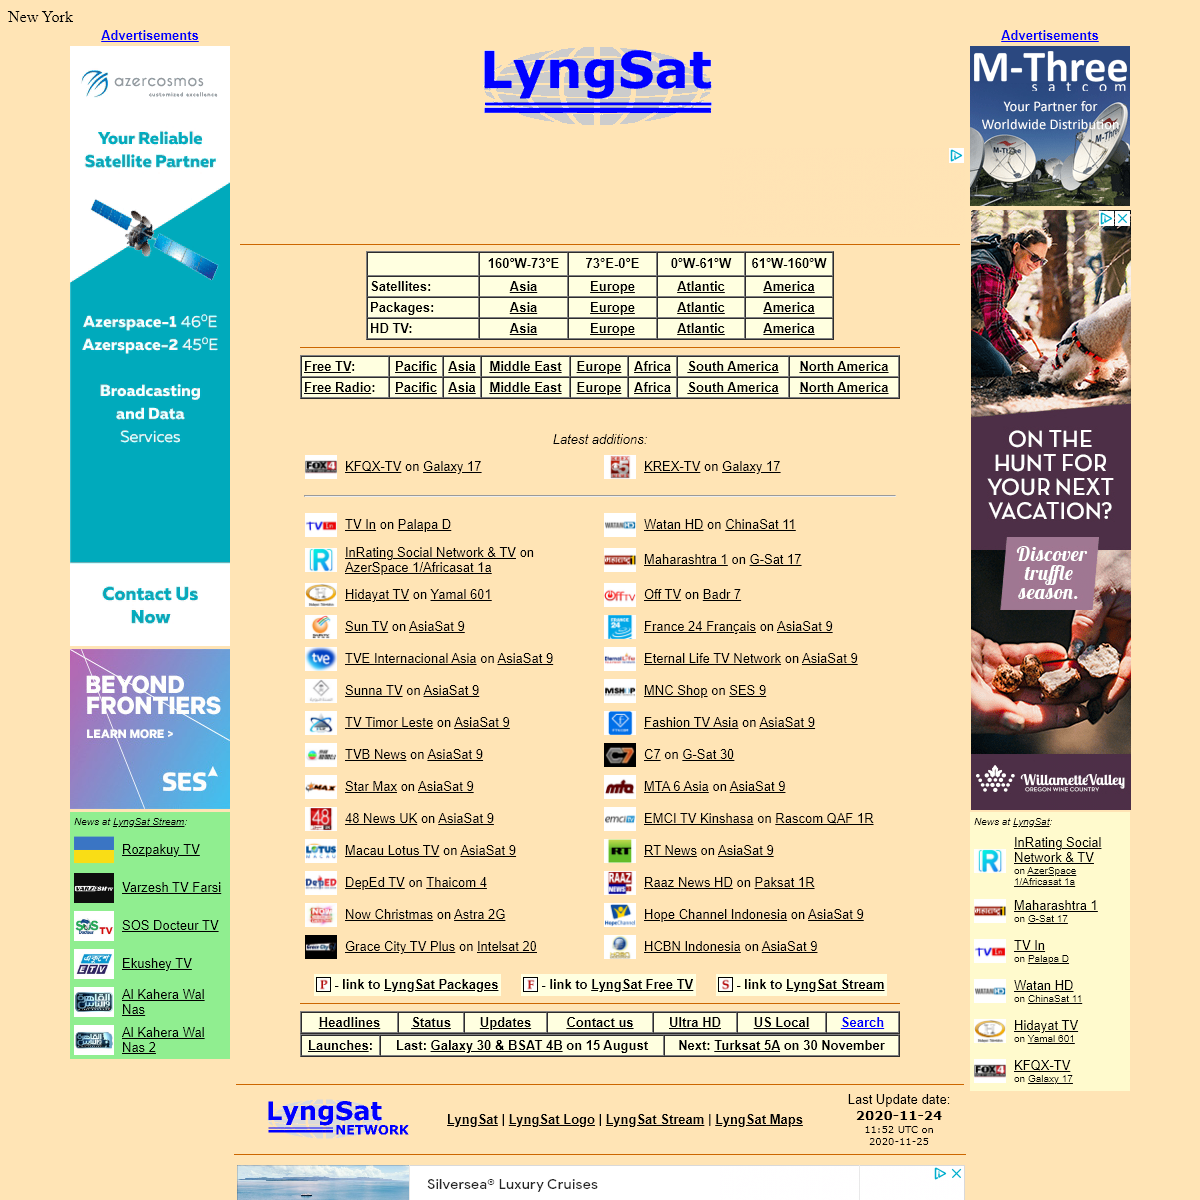 A complete backup of lyngsat.com